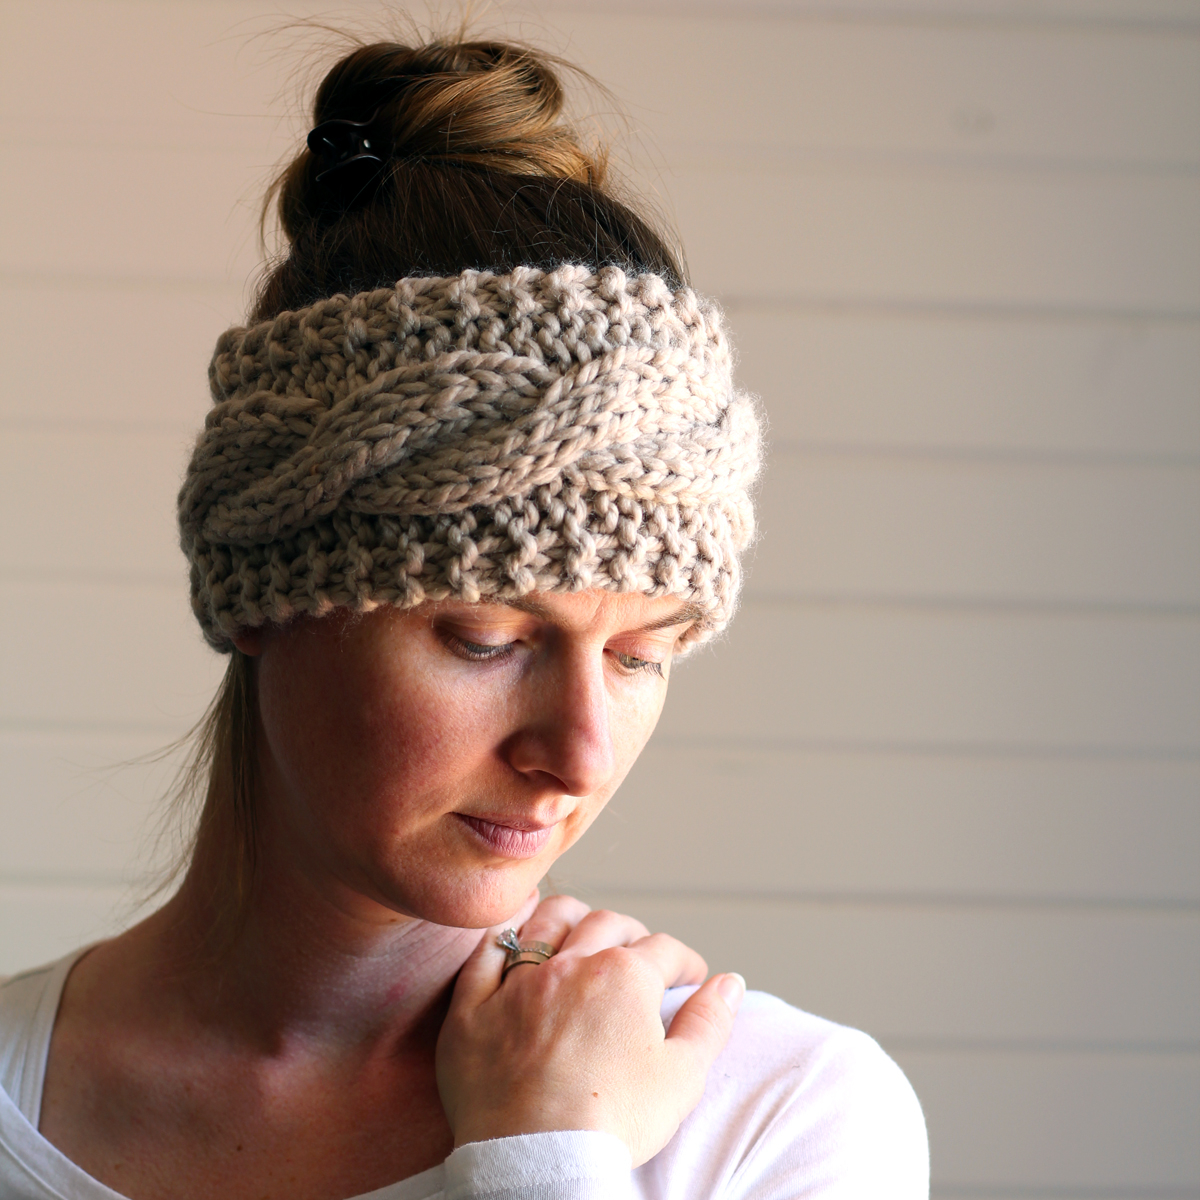 Knitted Headband Patterns With Flower Friendship Headband Knitting Pattern